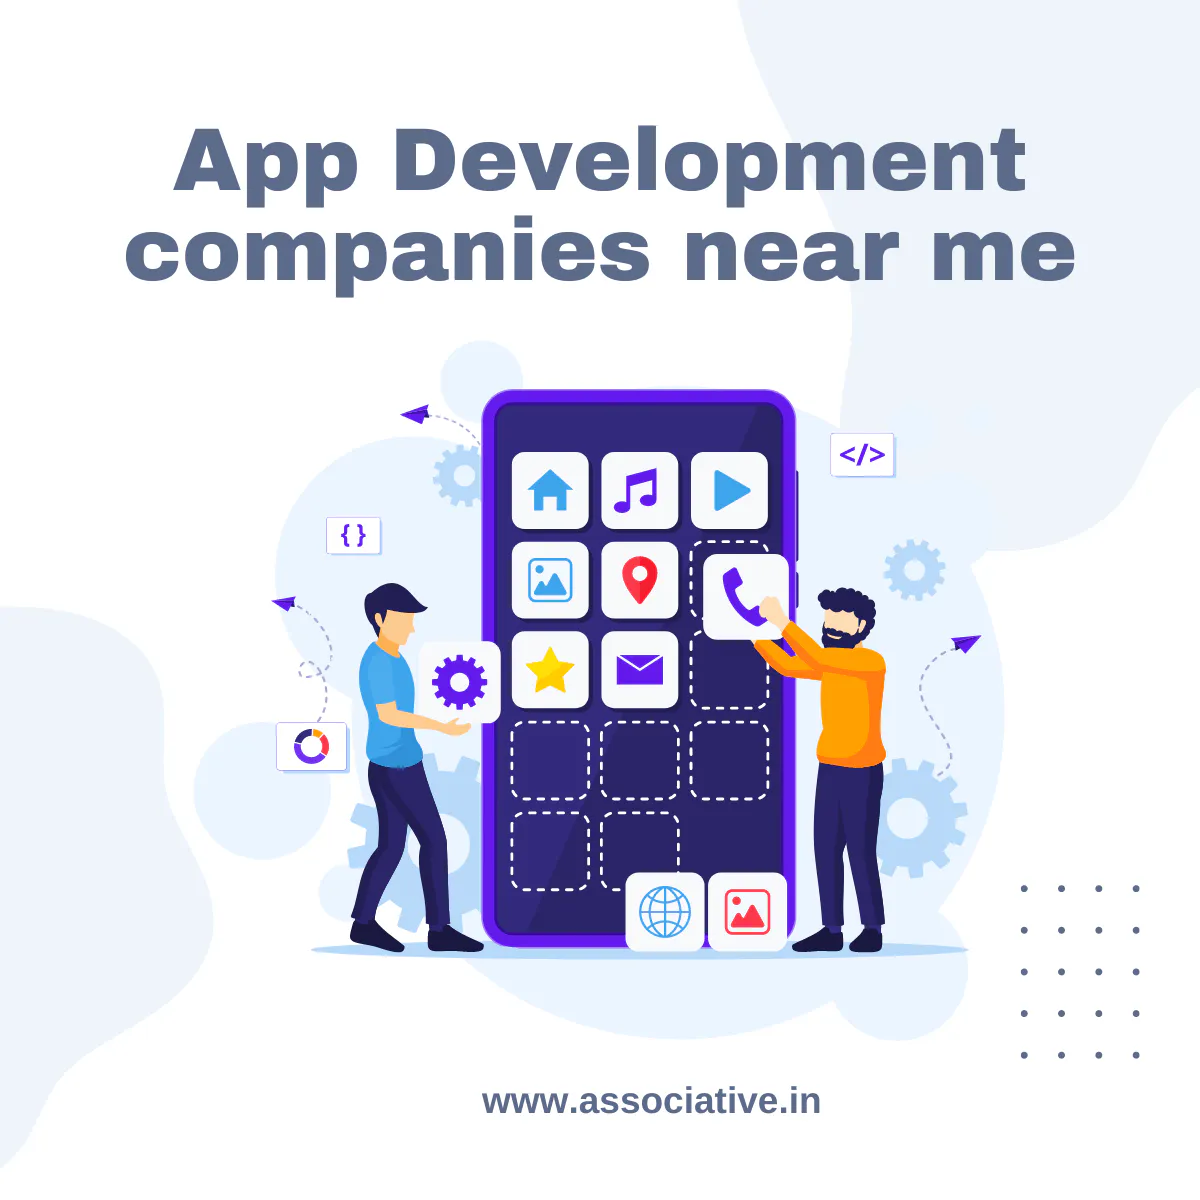 App Dev Companies: Partner with Associative to Build Your Dream App